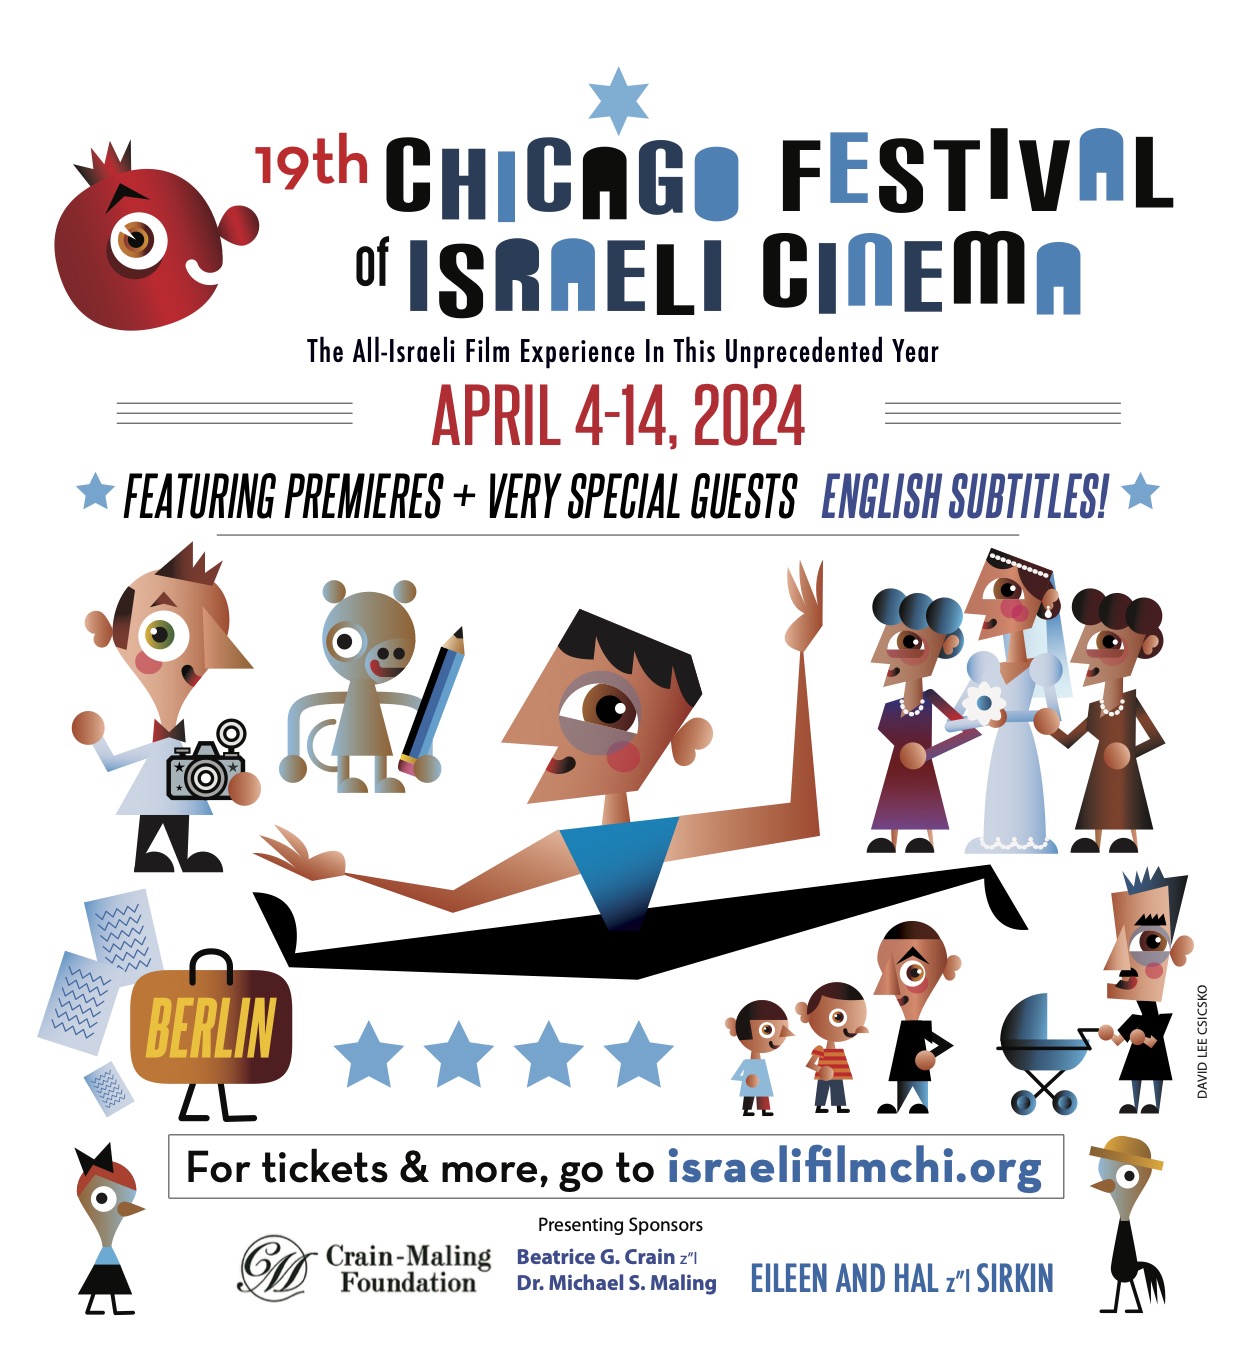 The 19th Chicago Festival of Israeli Cinema